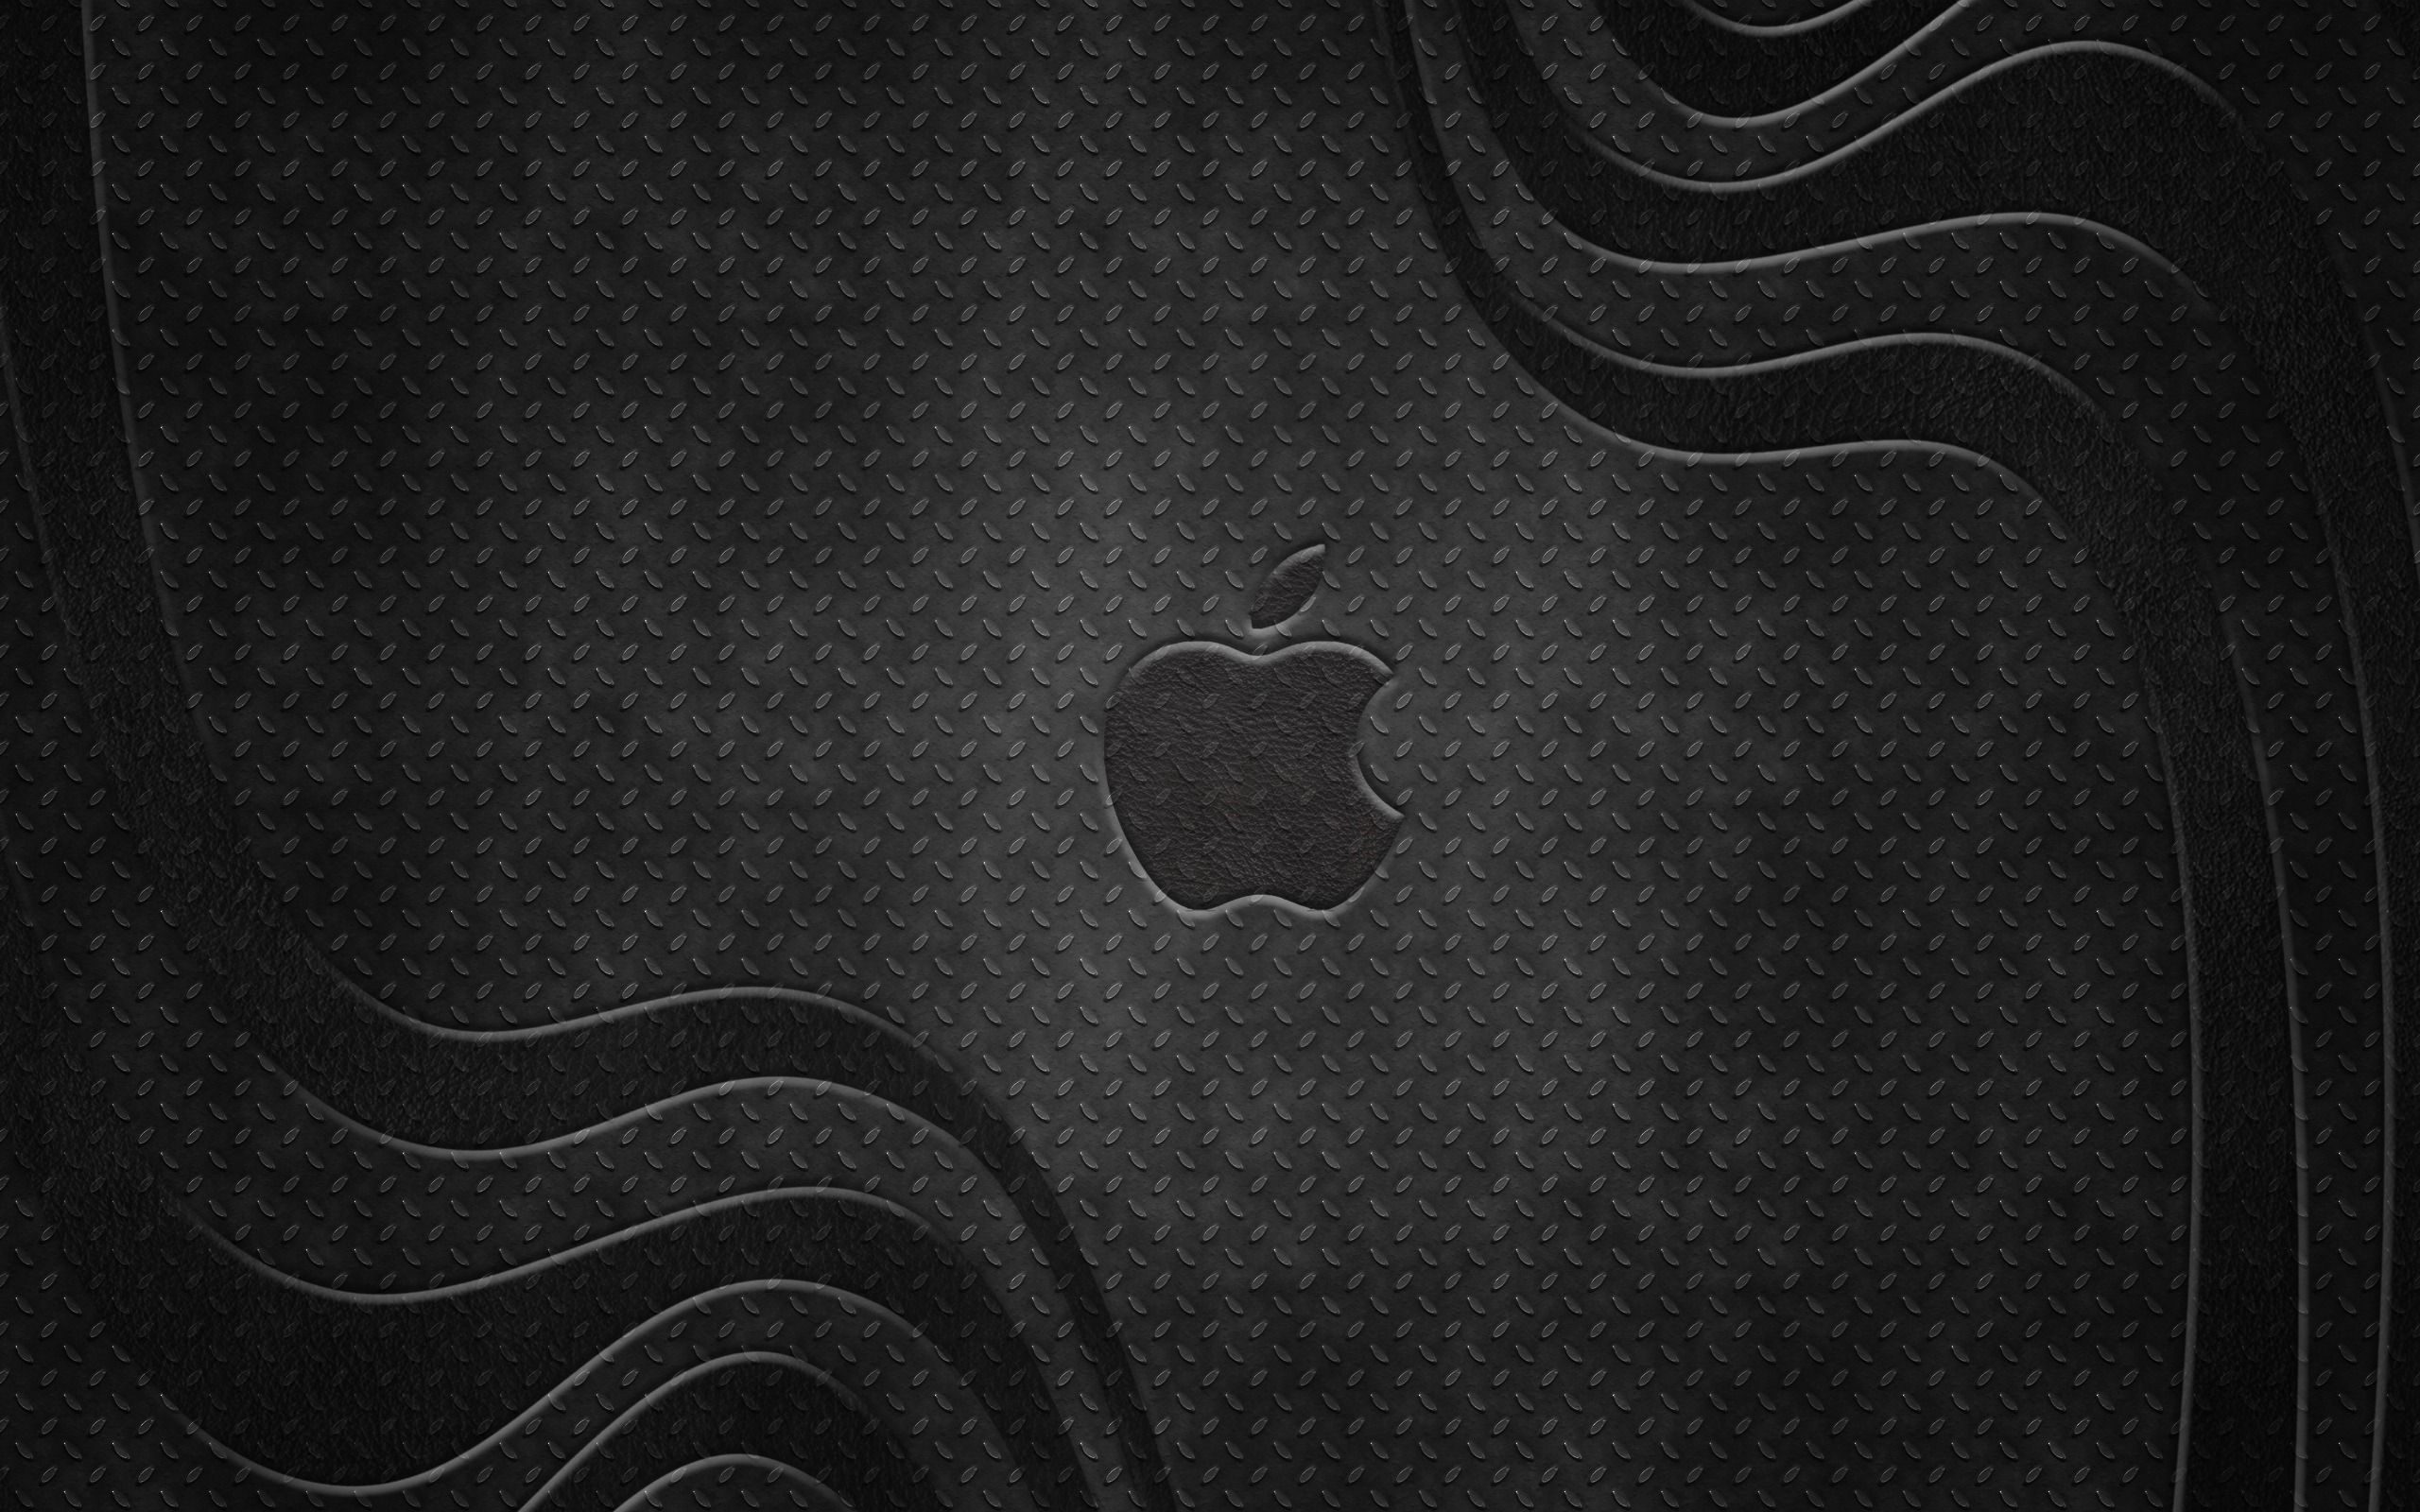 Apple logo on a metallic pattern Wallpaper 27316